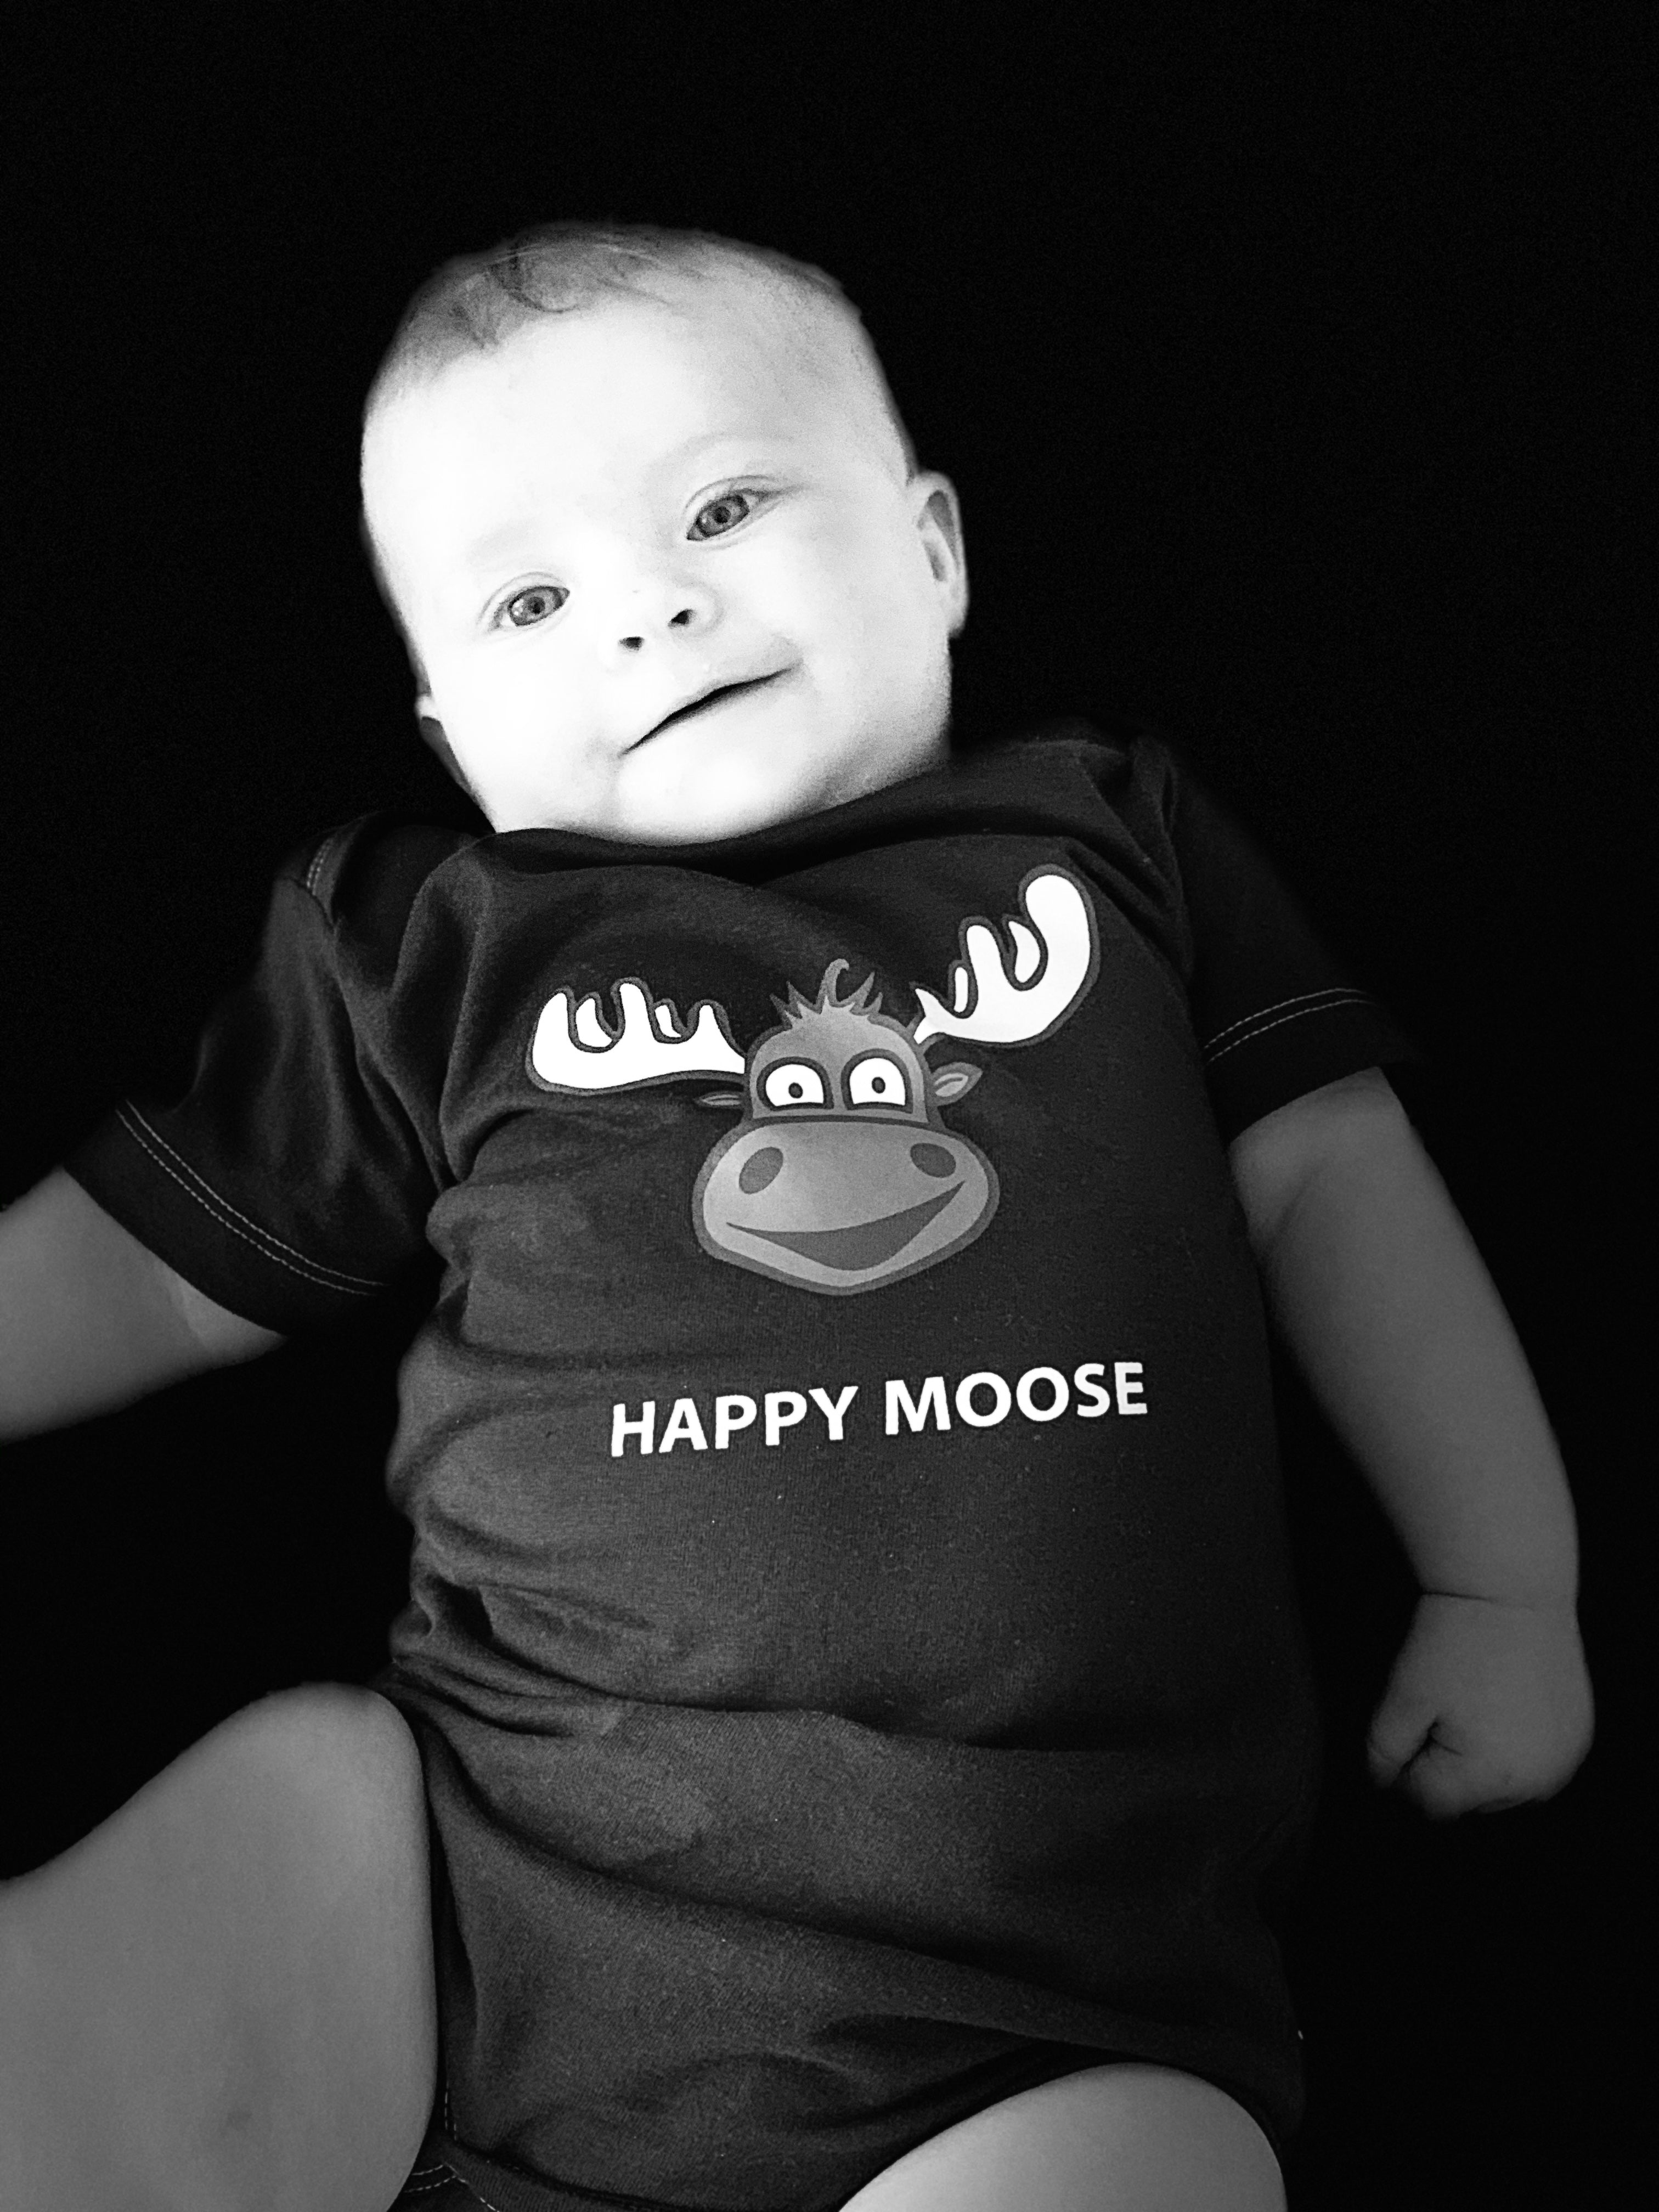 BODY HAPPY MOOSE, BABY